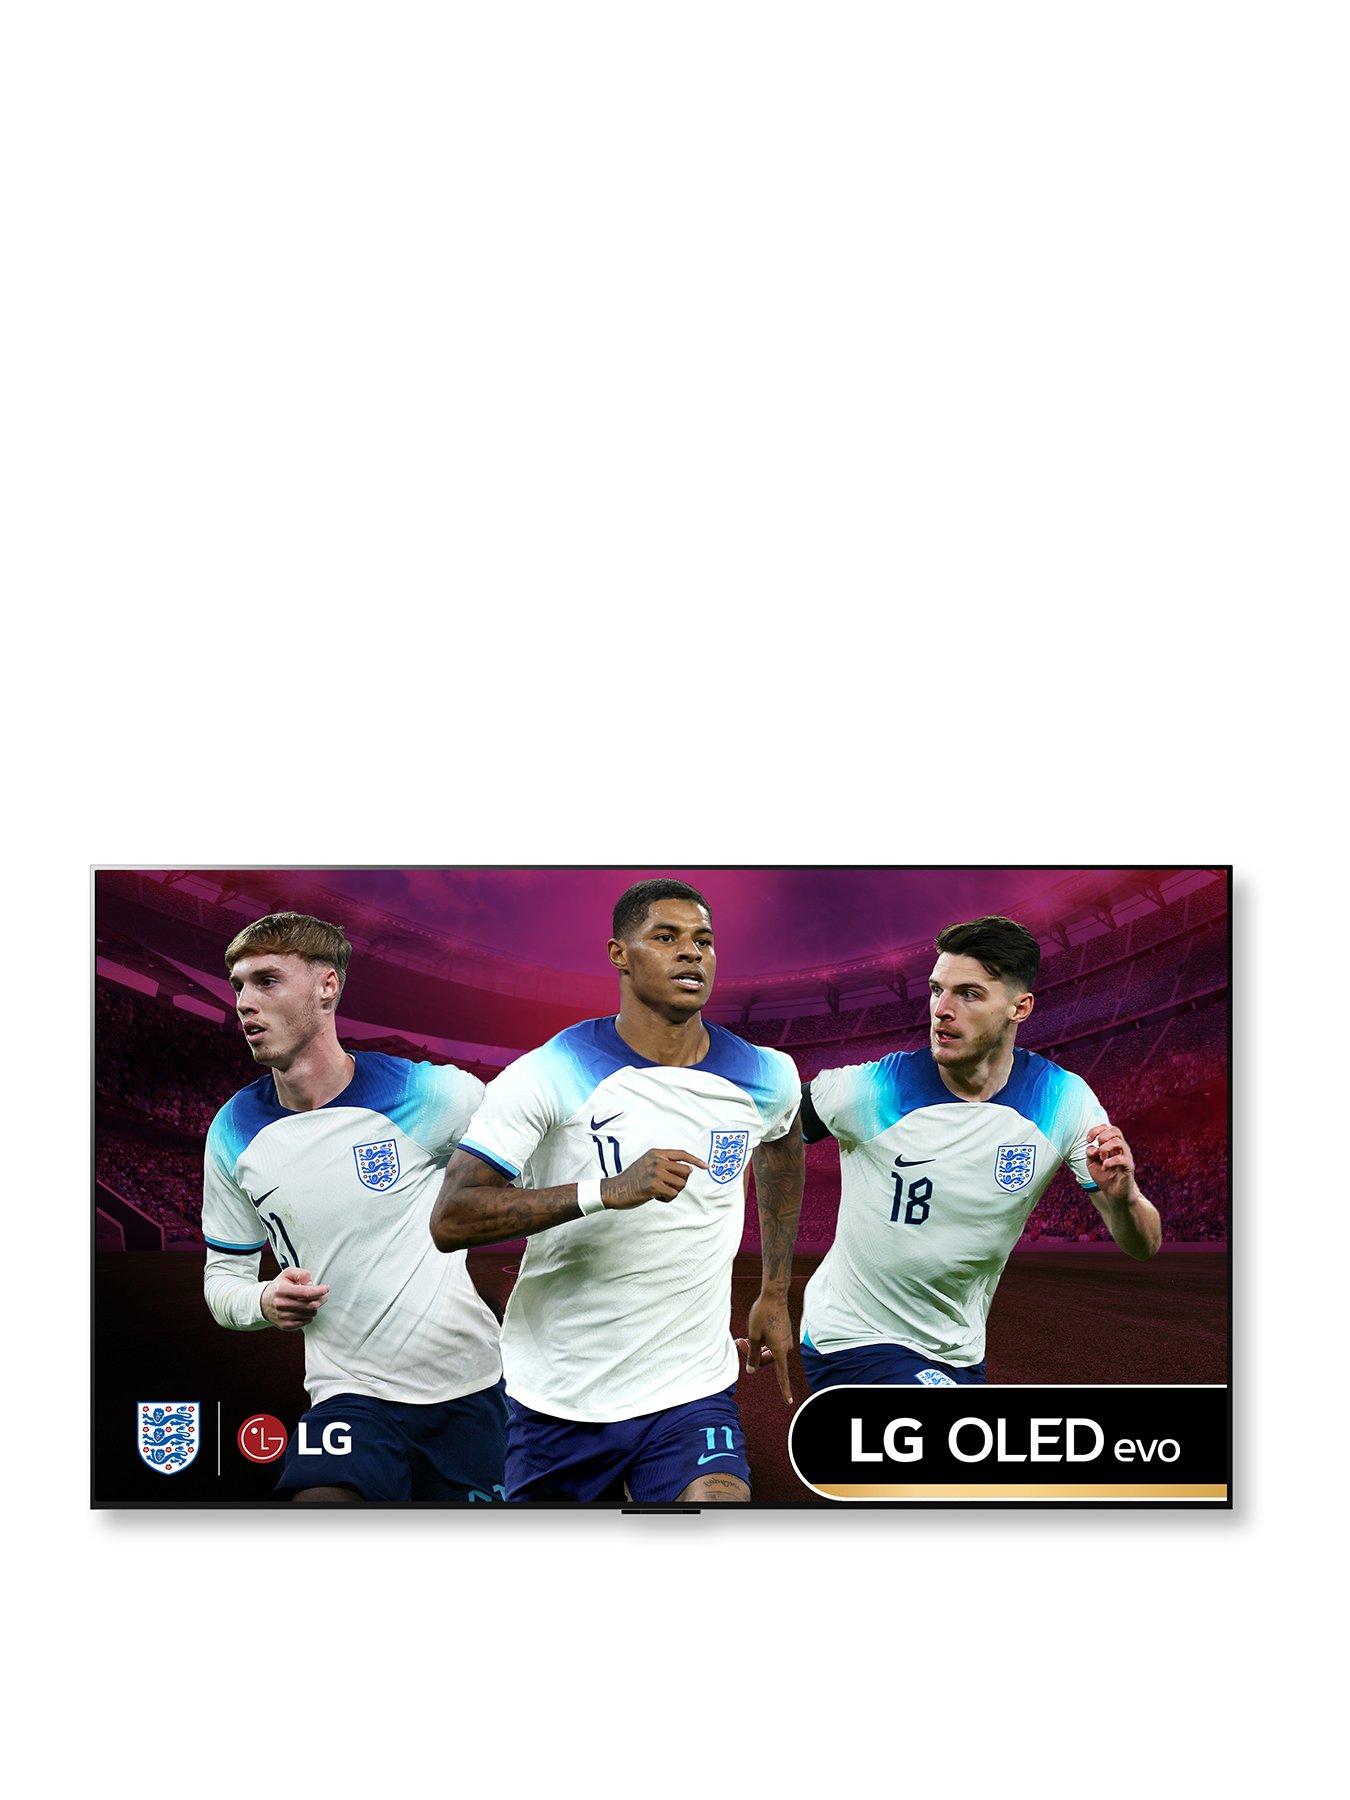 LG 4K OLED Smart TV 55 inch Series CS, a9 Gen5 4K Processor, G